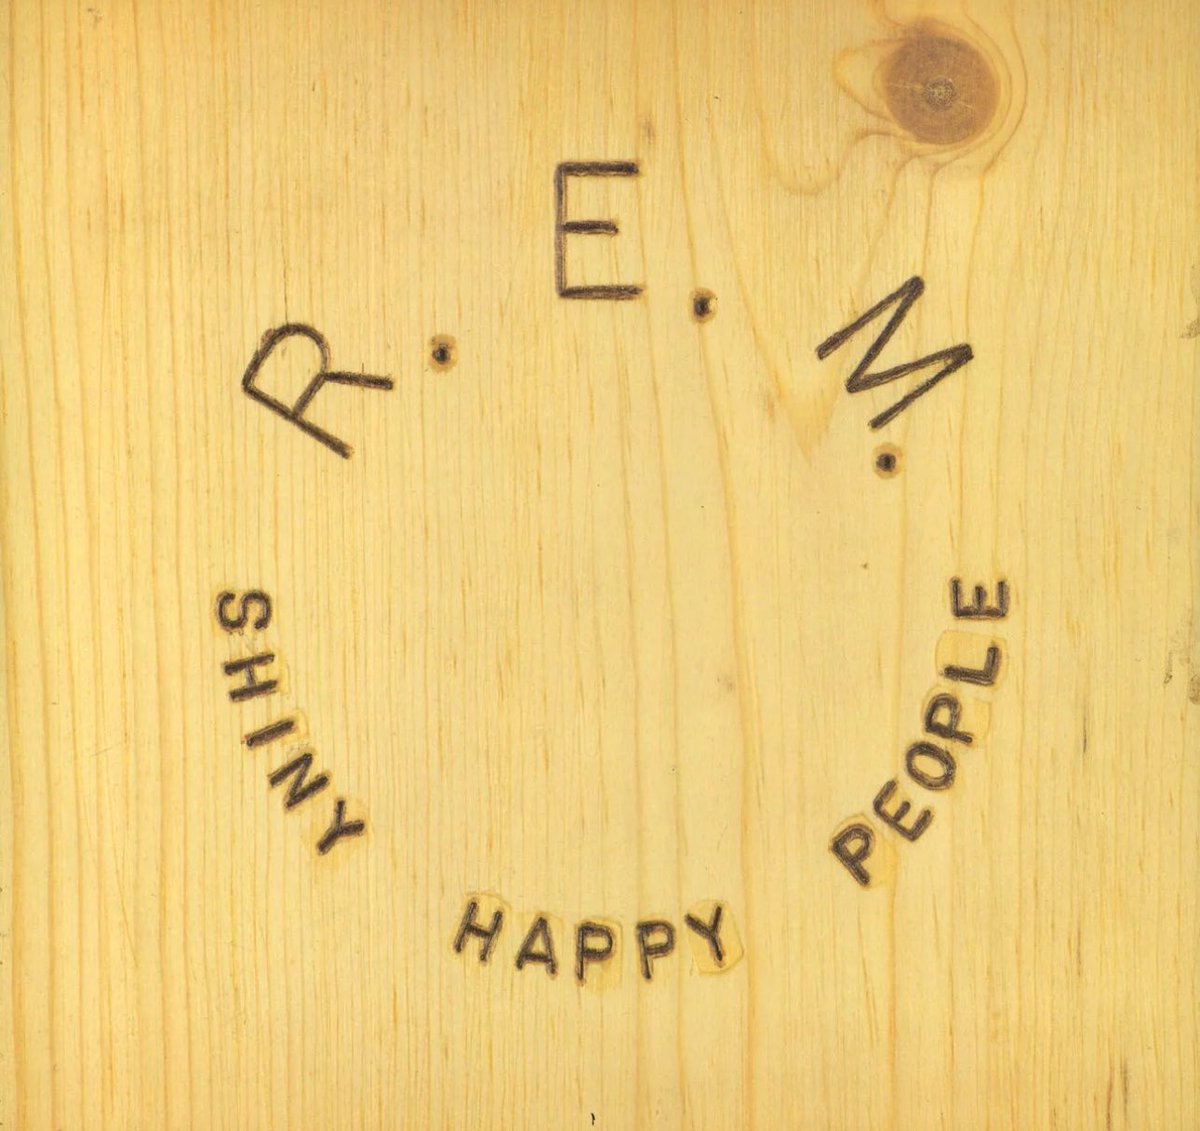 R.E.M
Shiny Happy People 

6 May 1991

#Rem #outoftime #shinyhappypeople #90s #music #vinyl #vinylrecords #records #vinylsingle